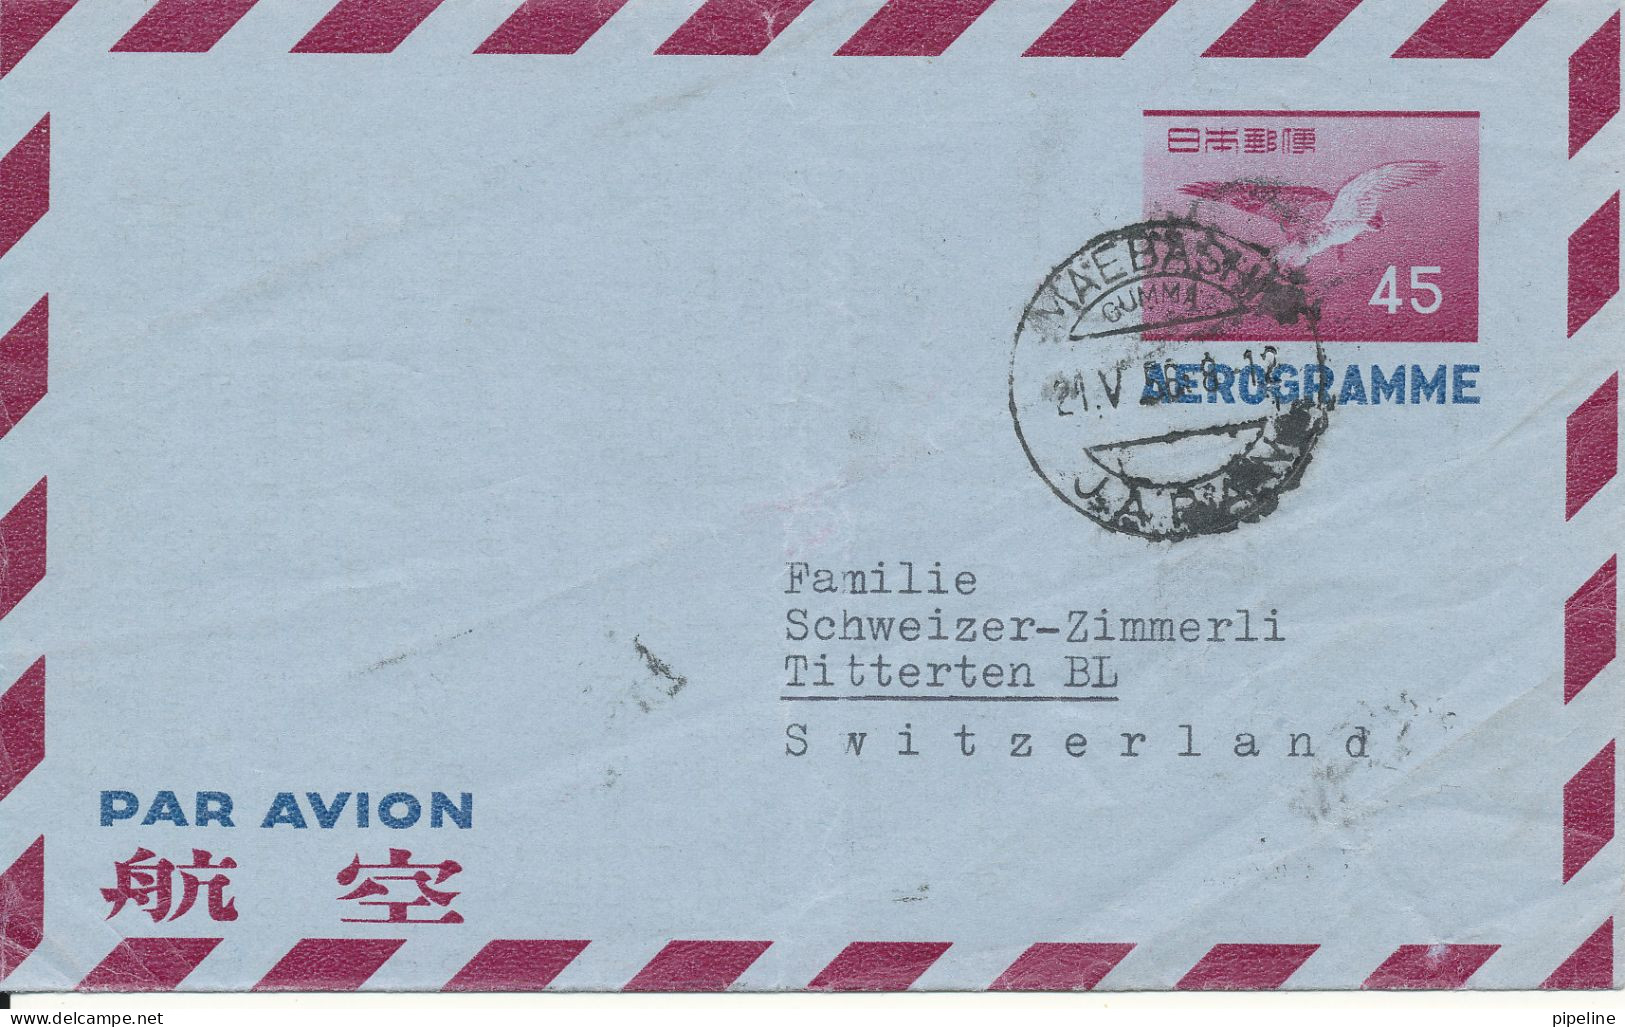 Japan Aerogramme Sent To Switzerland 19-5-1956 - Aerogramme